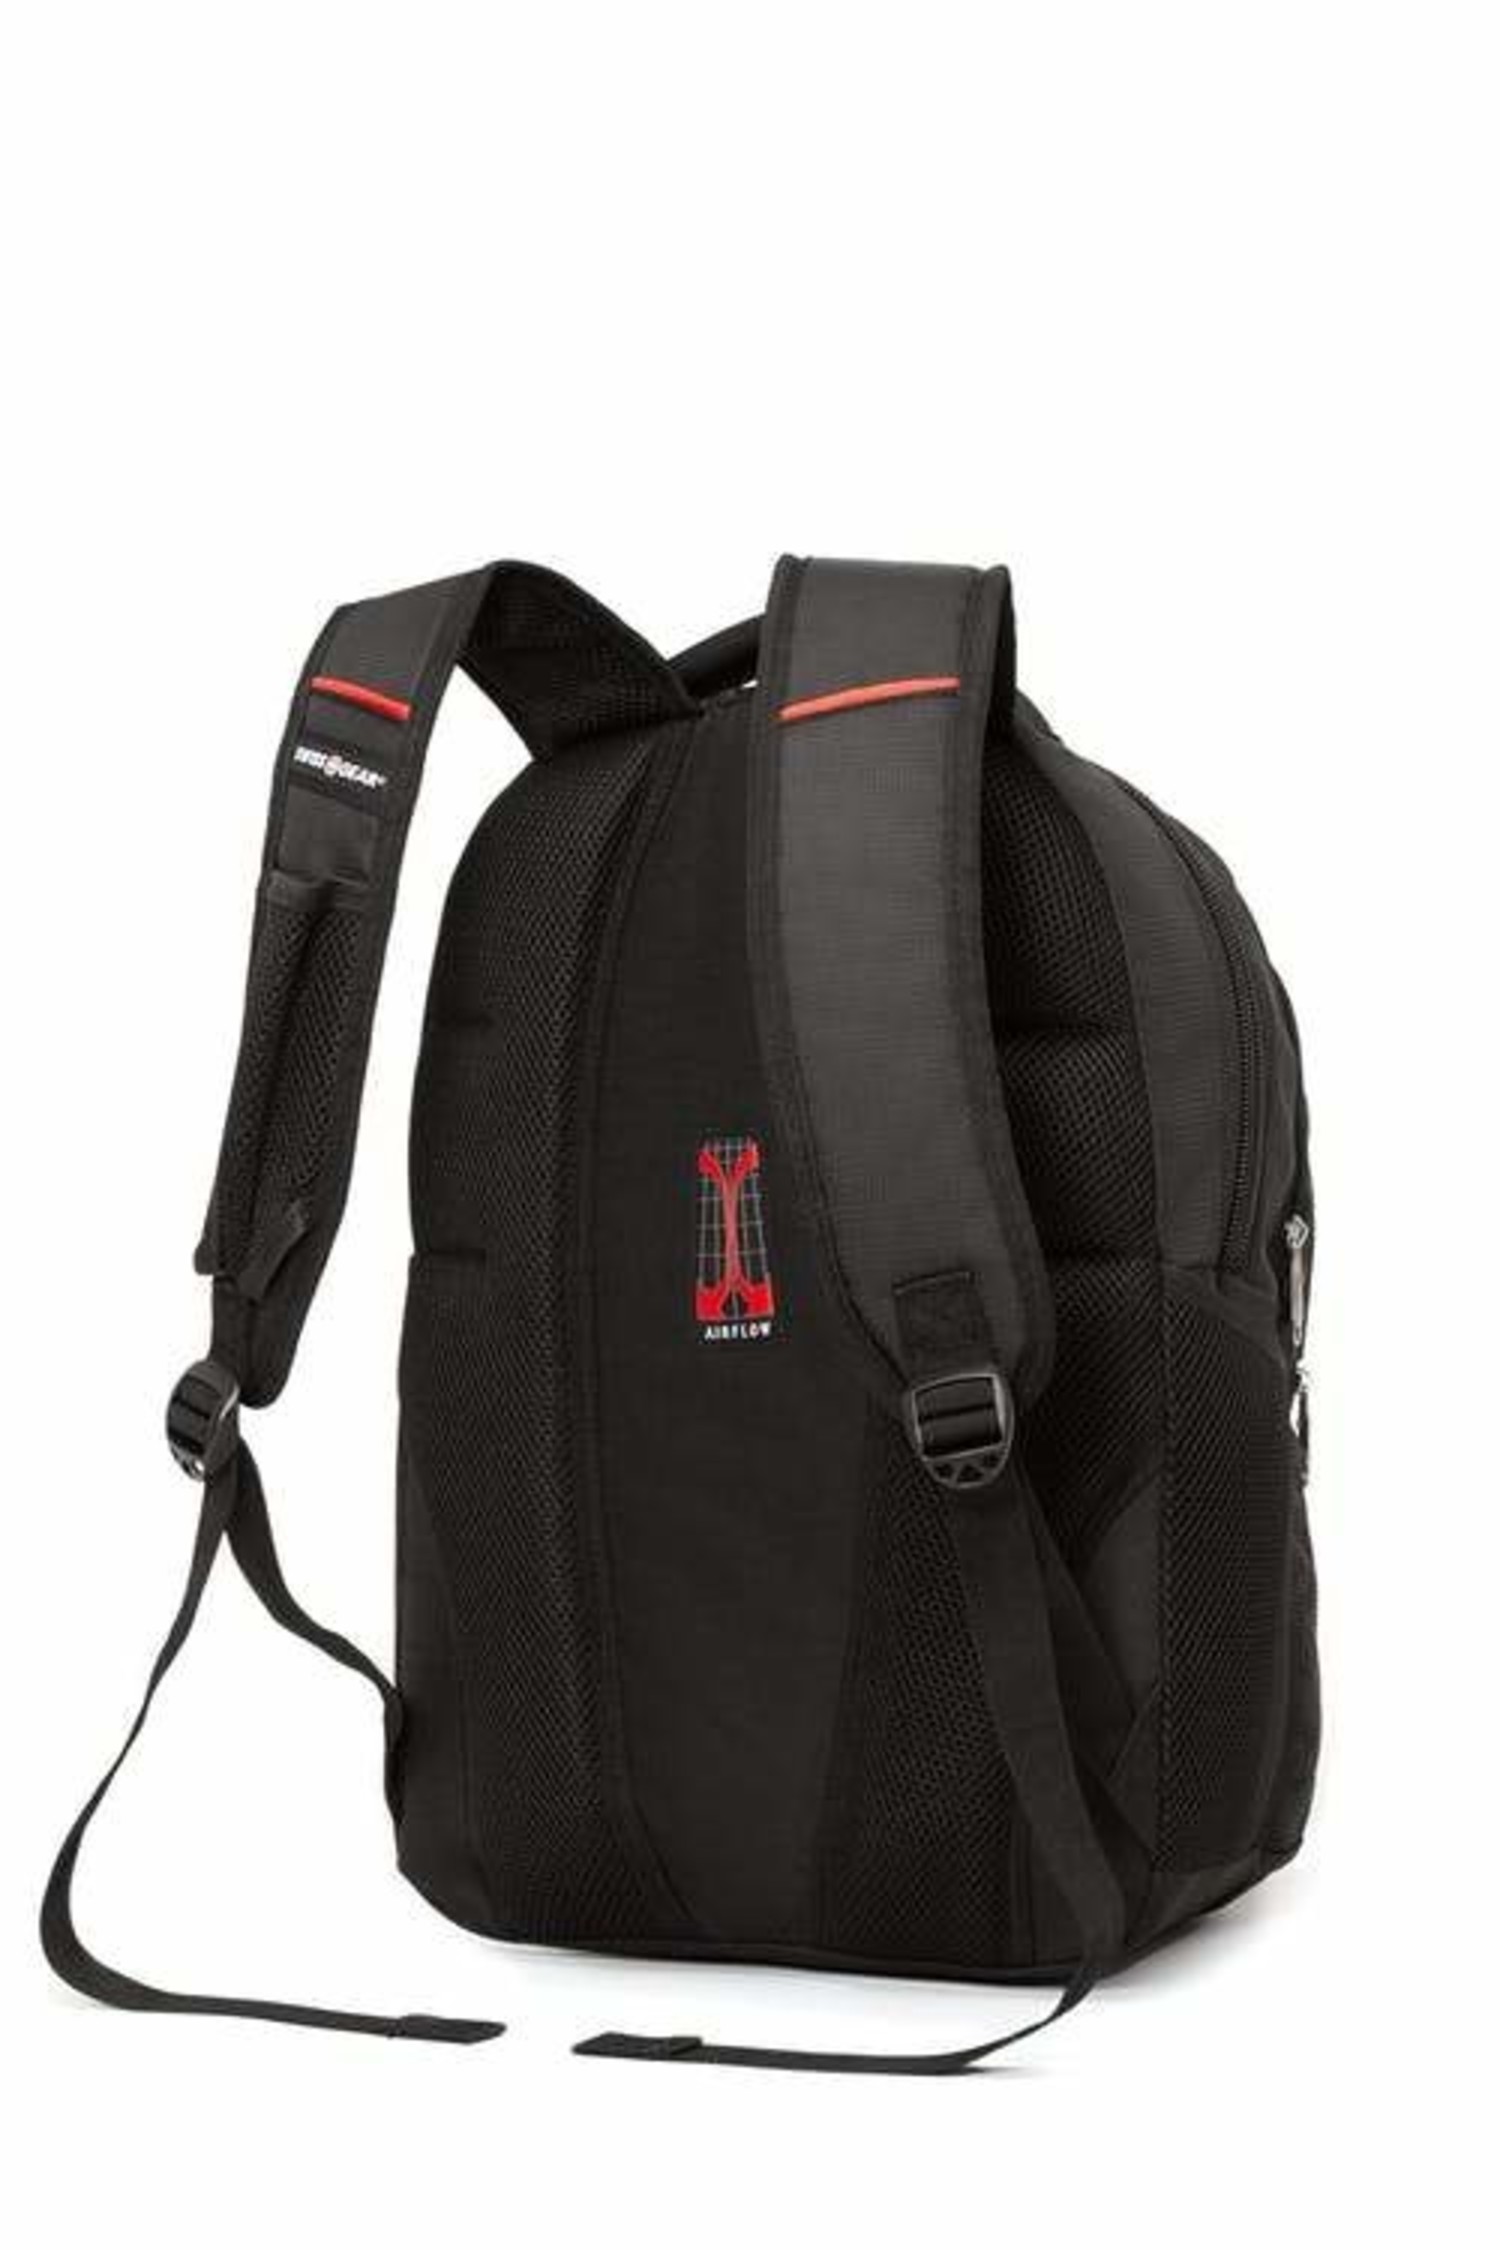 Swiss gear backpack Deluxe Backpack - Swissmade Direct